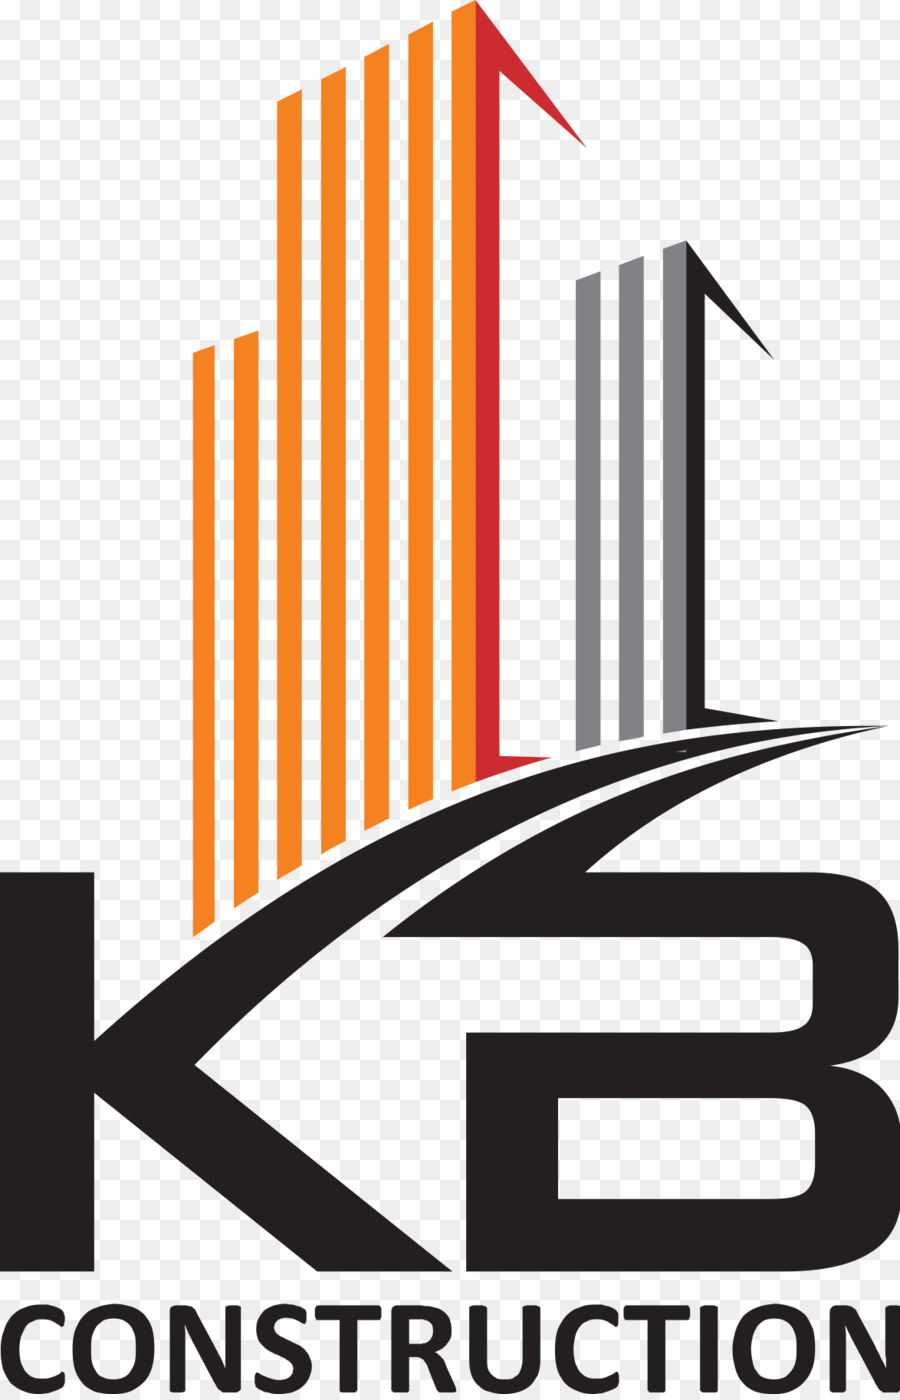 Logo-Grafik-design-Architektur-engineering - Bau